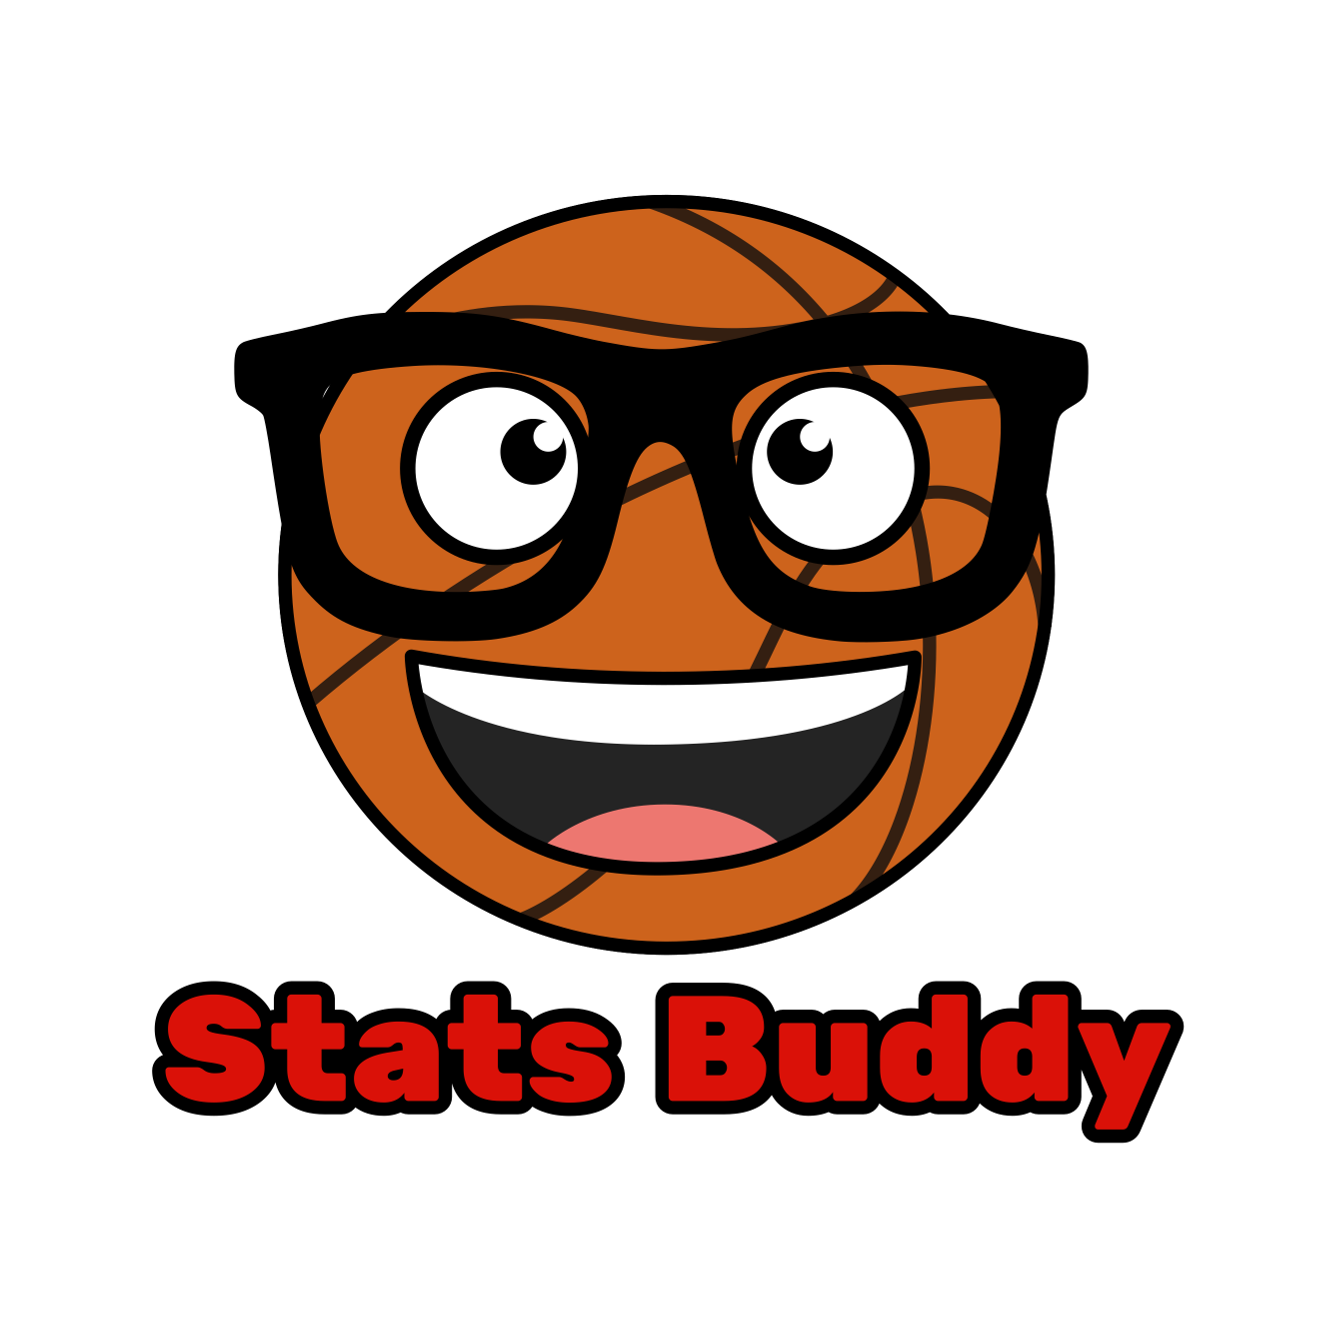 (c) Stats-buddy.de